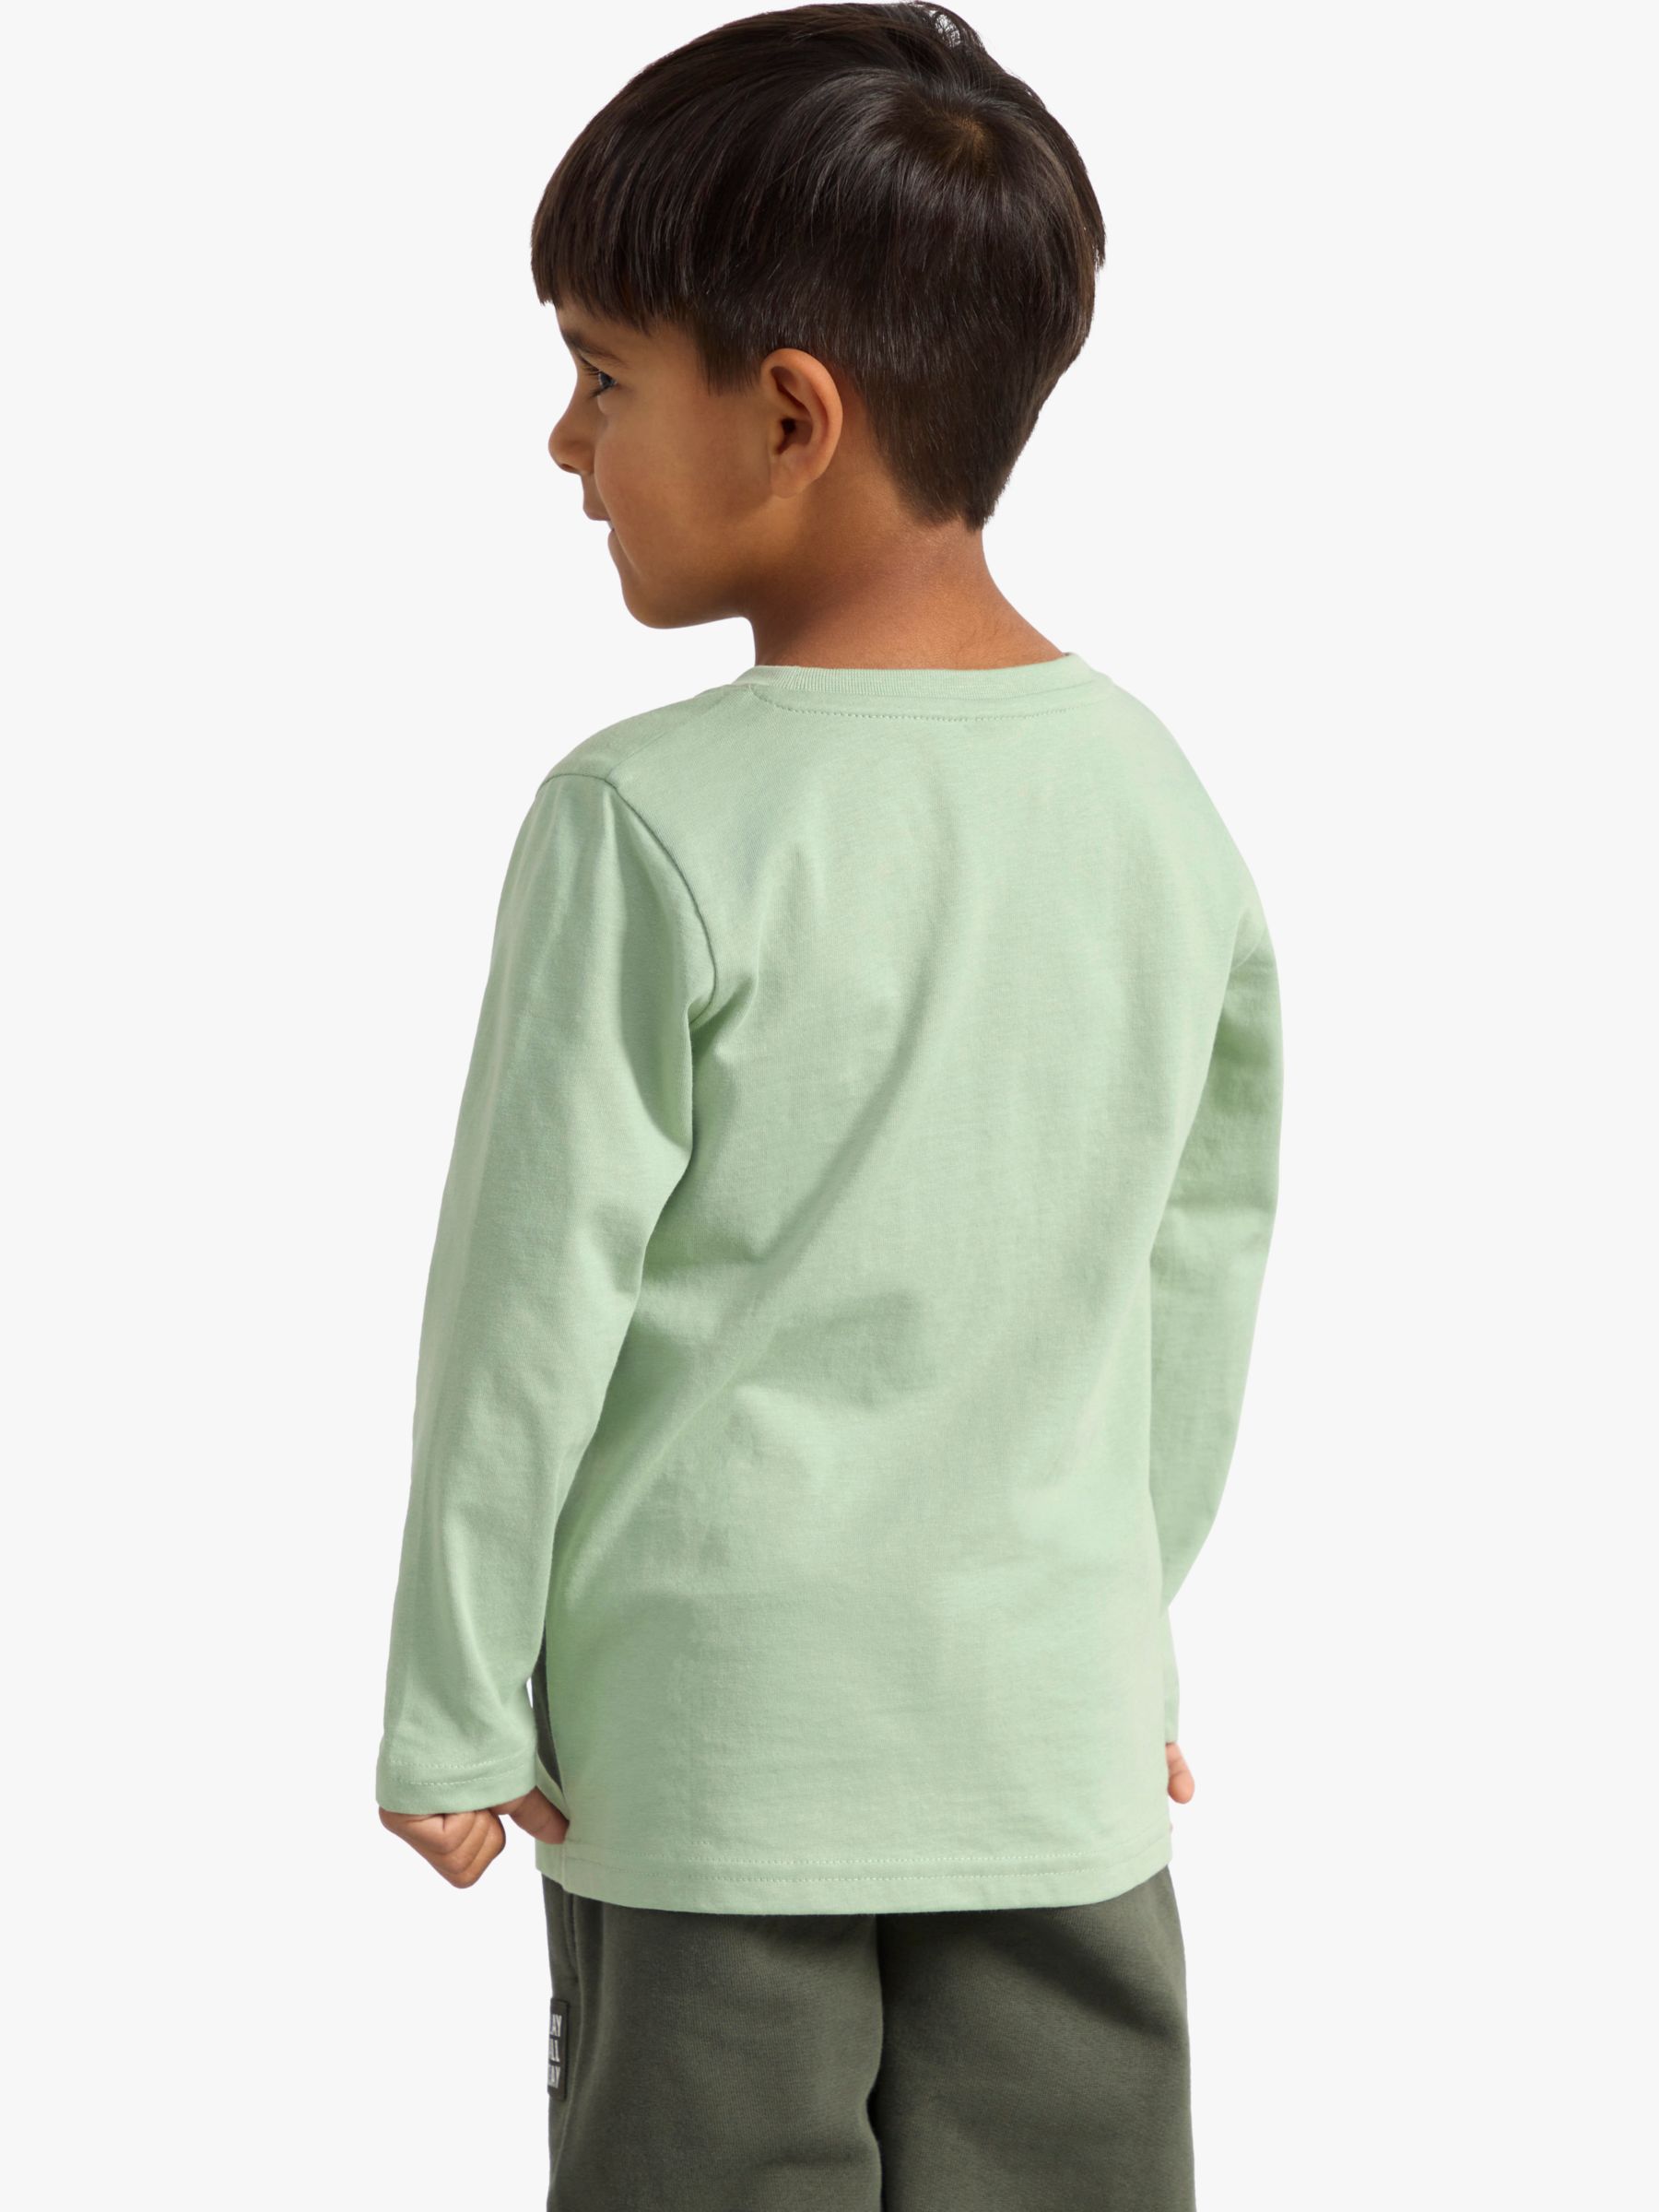 Lindex Kids' Dinosaur Long Sleeve Top, Light Dusty Green, 7-8 years